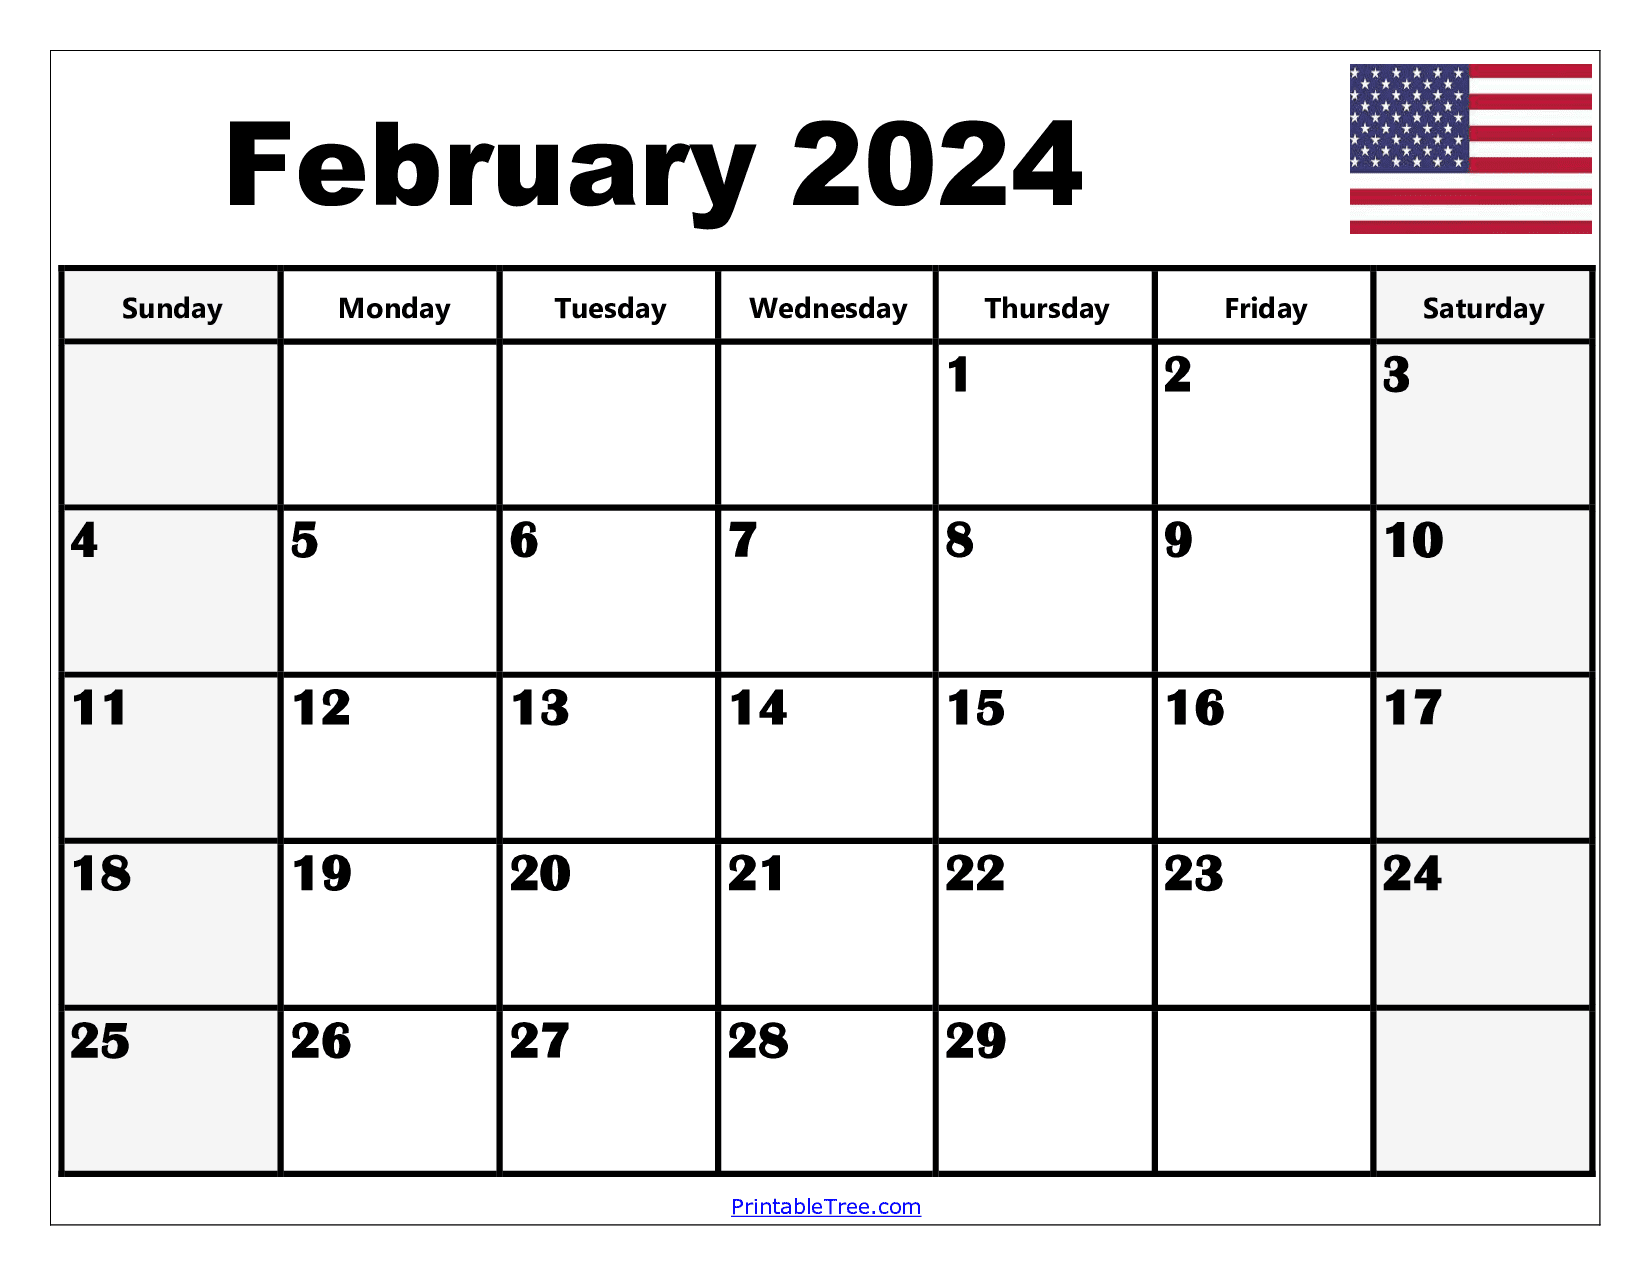 February 2024 Calendar Printable Pdf Template With Holidays for February 2024 Calendar With Holidays Printable